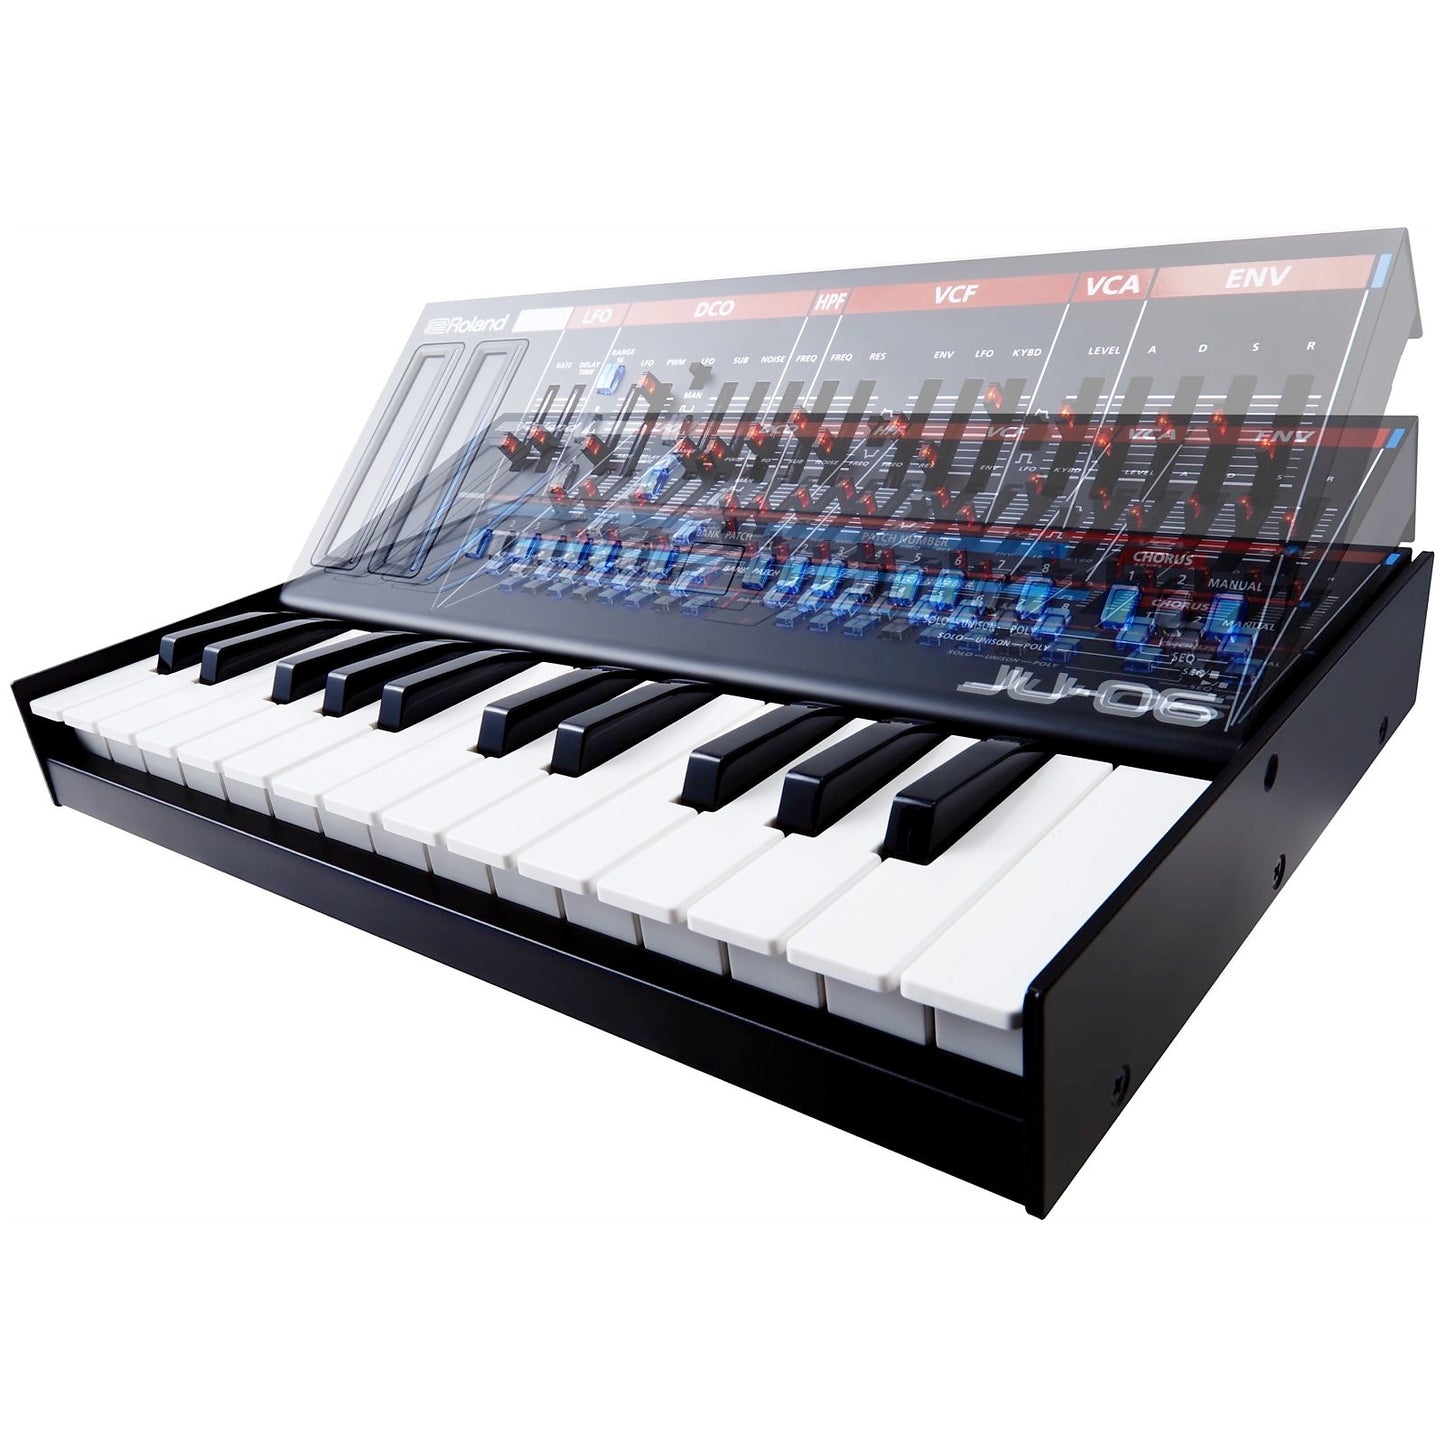 Roland K-25m USB MIDI Keyboard Dock, 25-Key